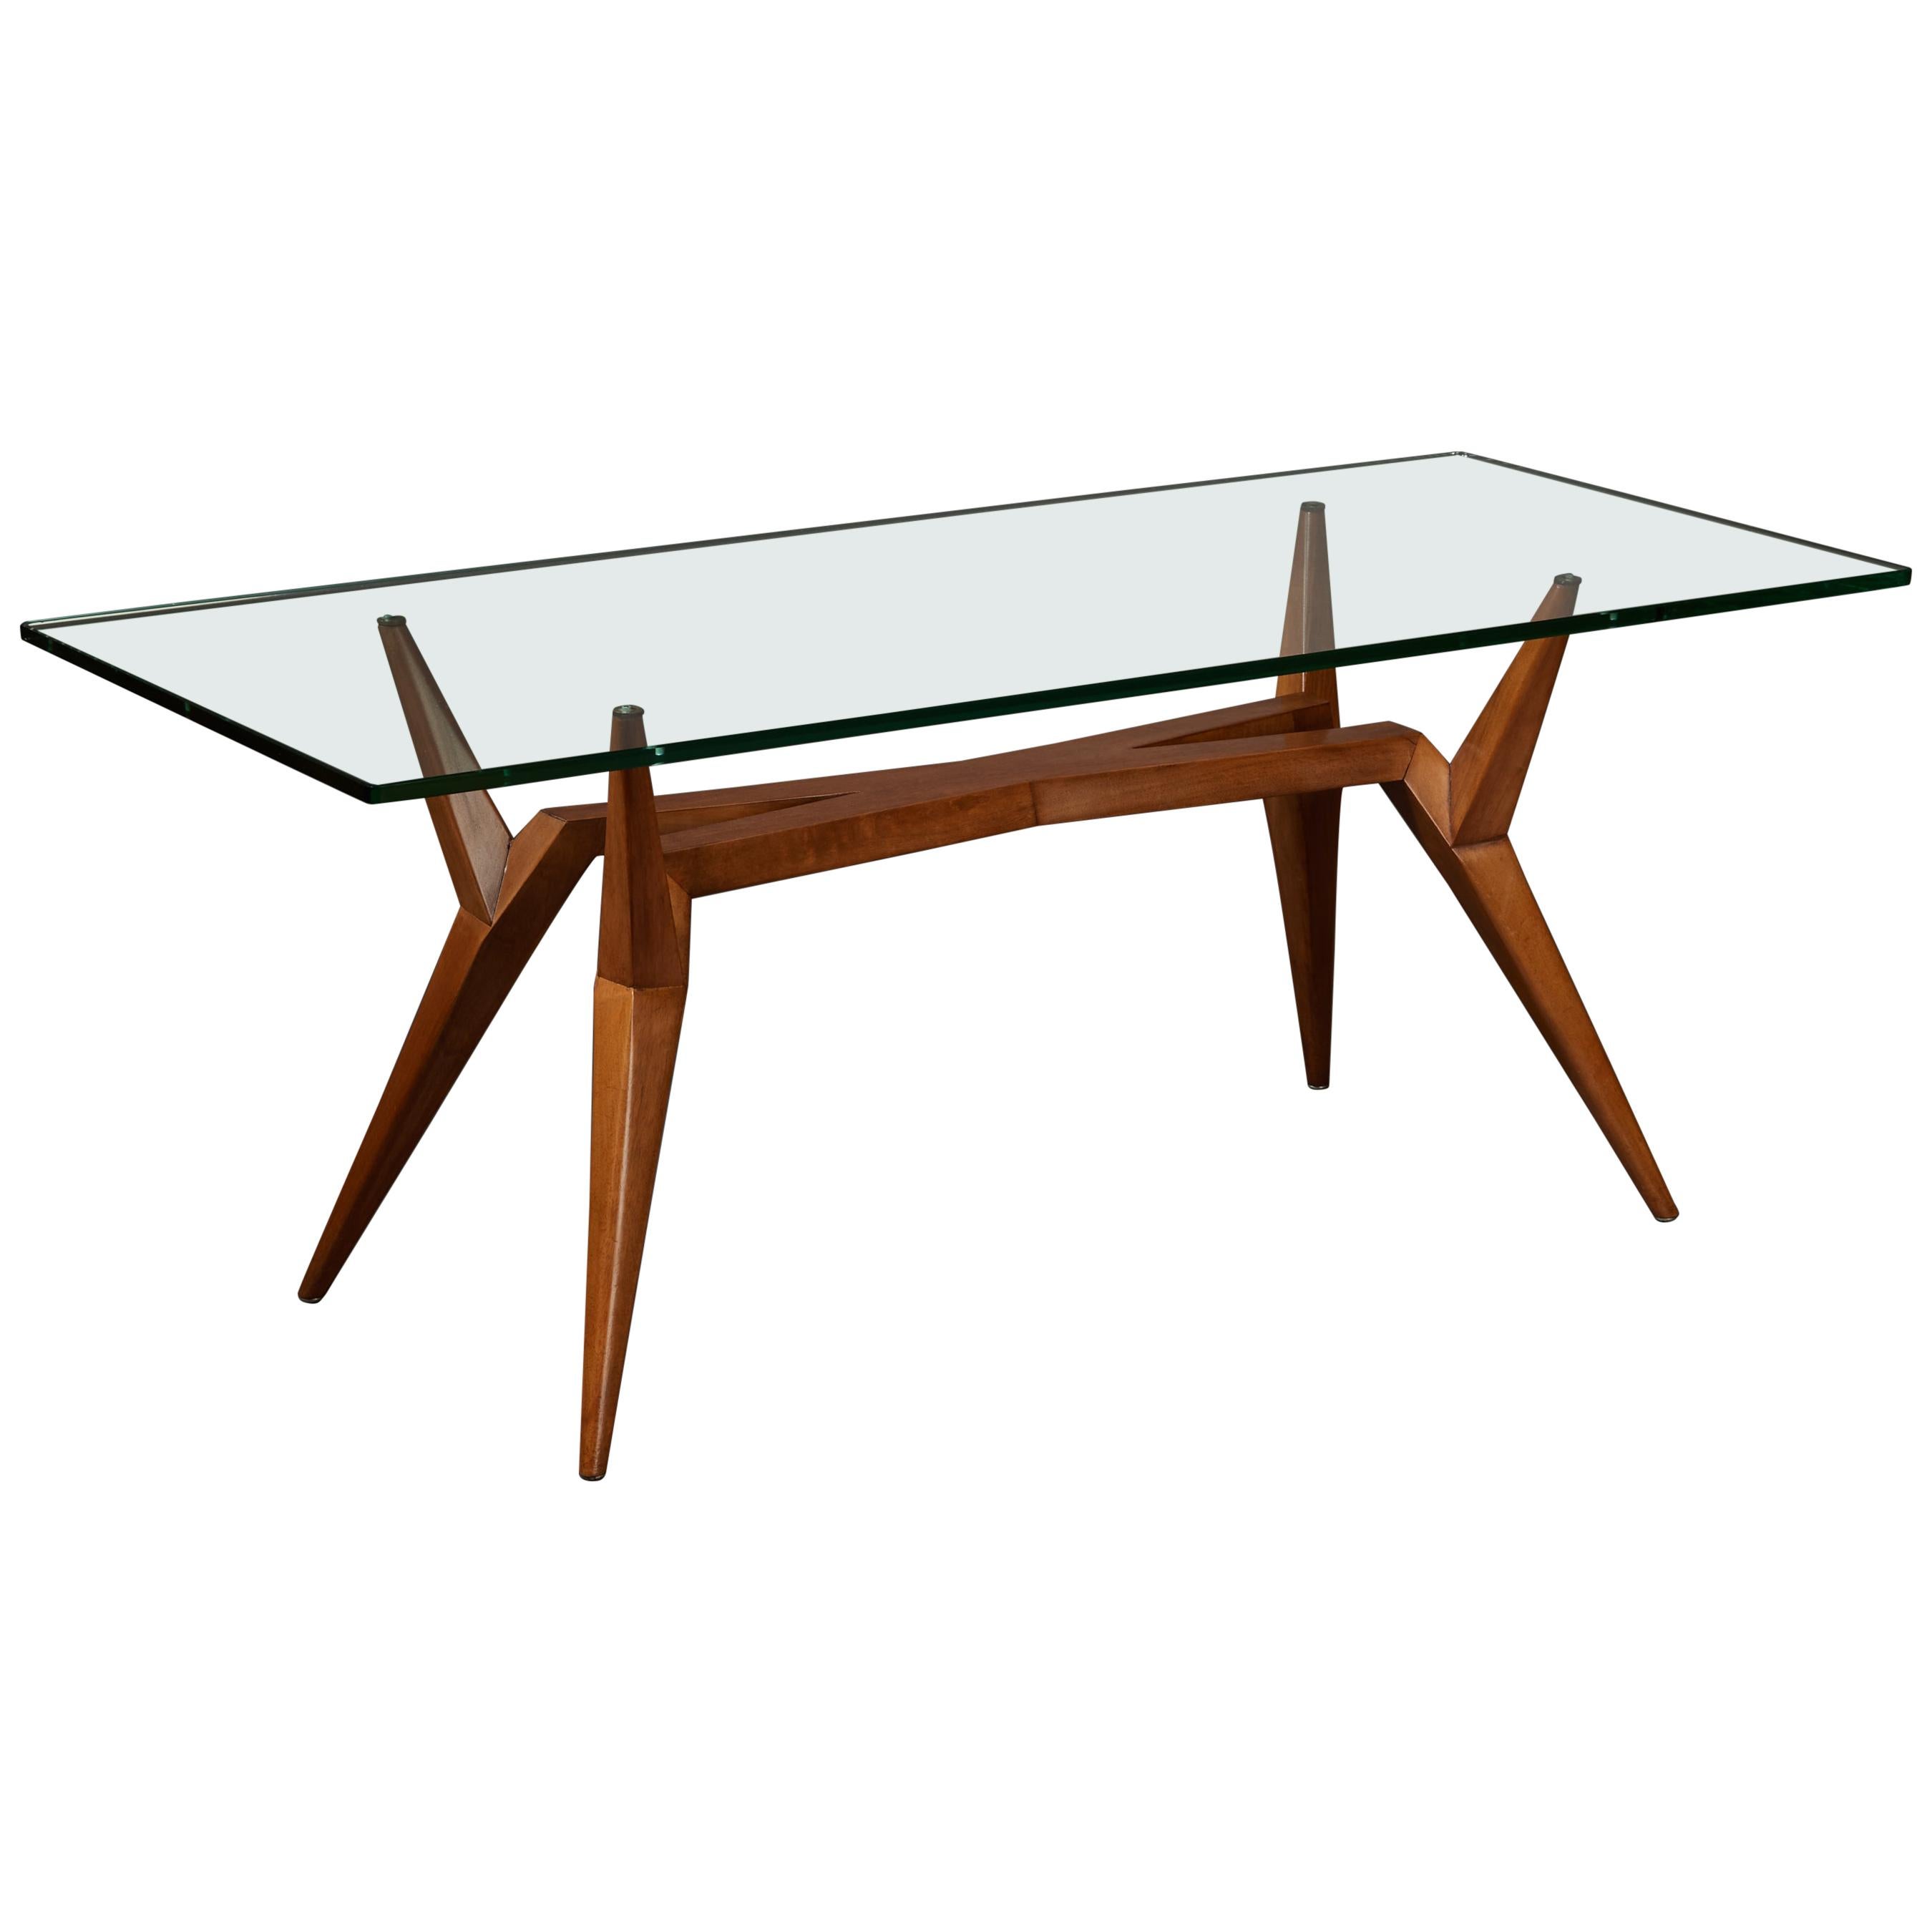 Pierluigi Giordani Rare Constructivist Coffee Table in Wood & Glass, Italy 1950s